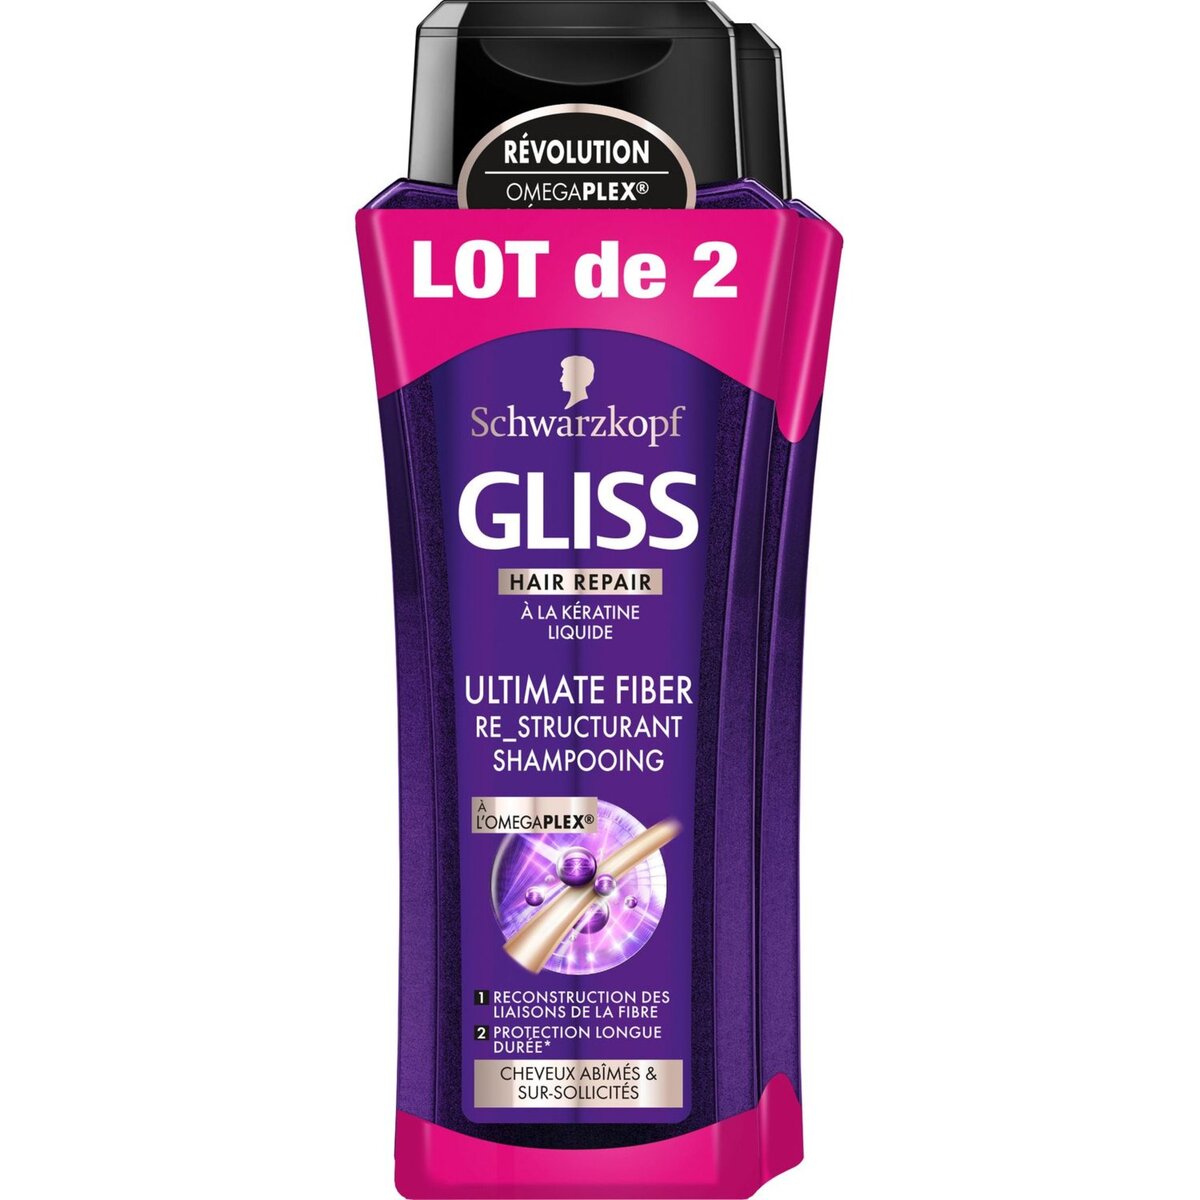 GLISS Gliss shampooing ultimate fiber 2x250ml